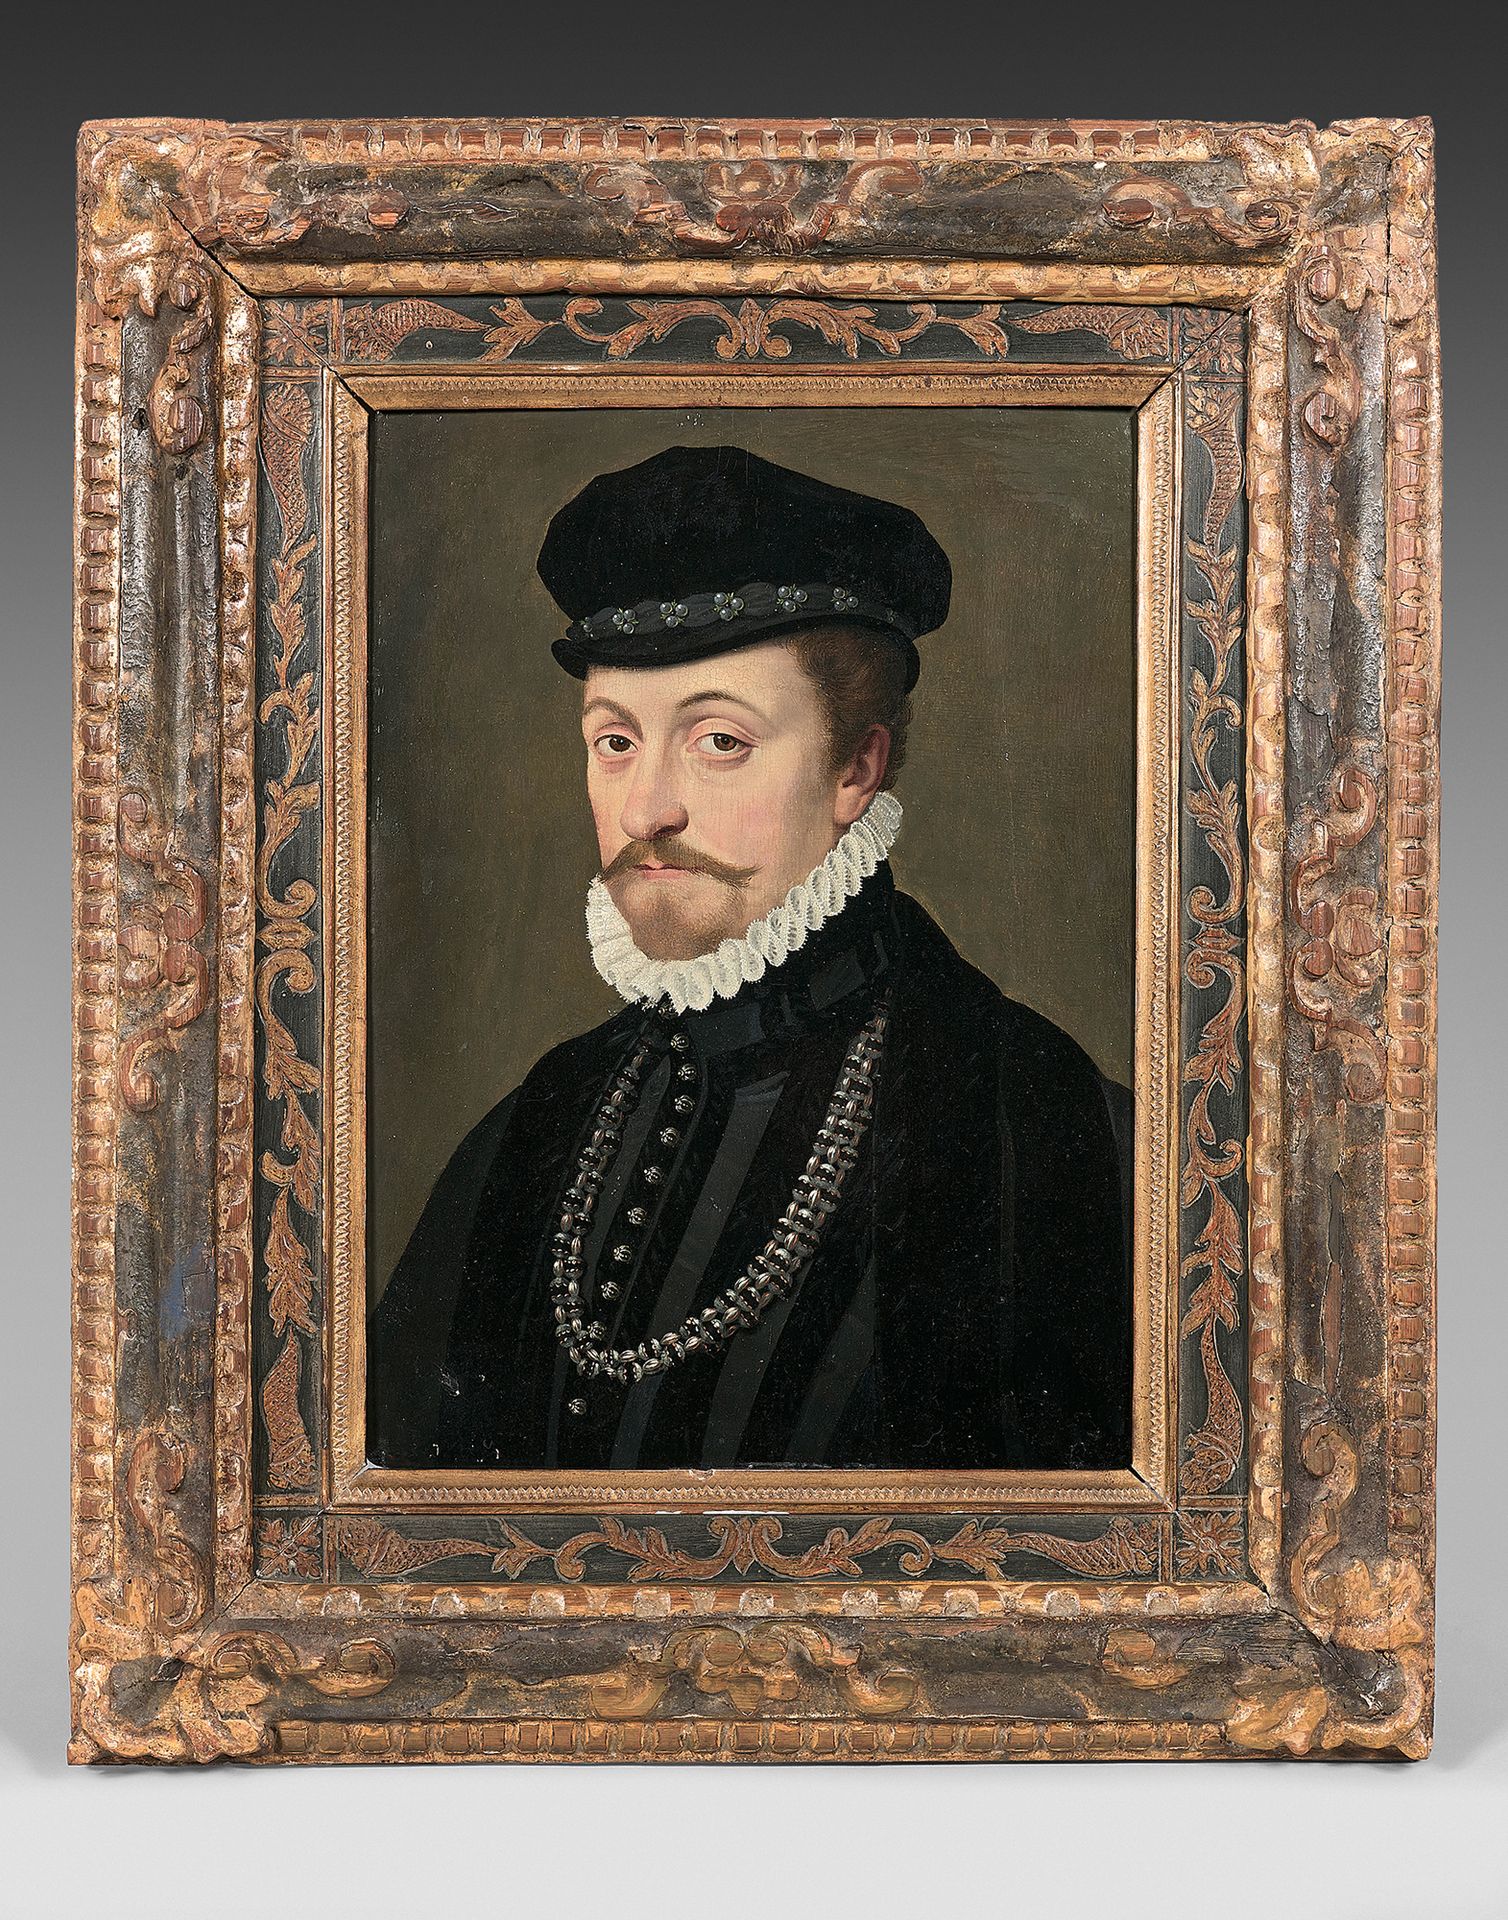 École FRANÇAISE vers 1600 Retrato de hombre con gola
Panel reforzado.
35 x 25 cm&hellip;